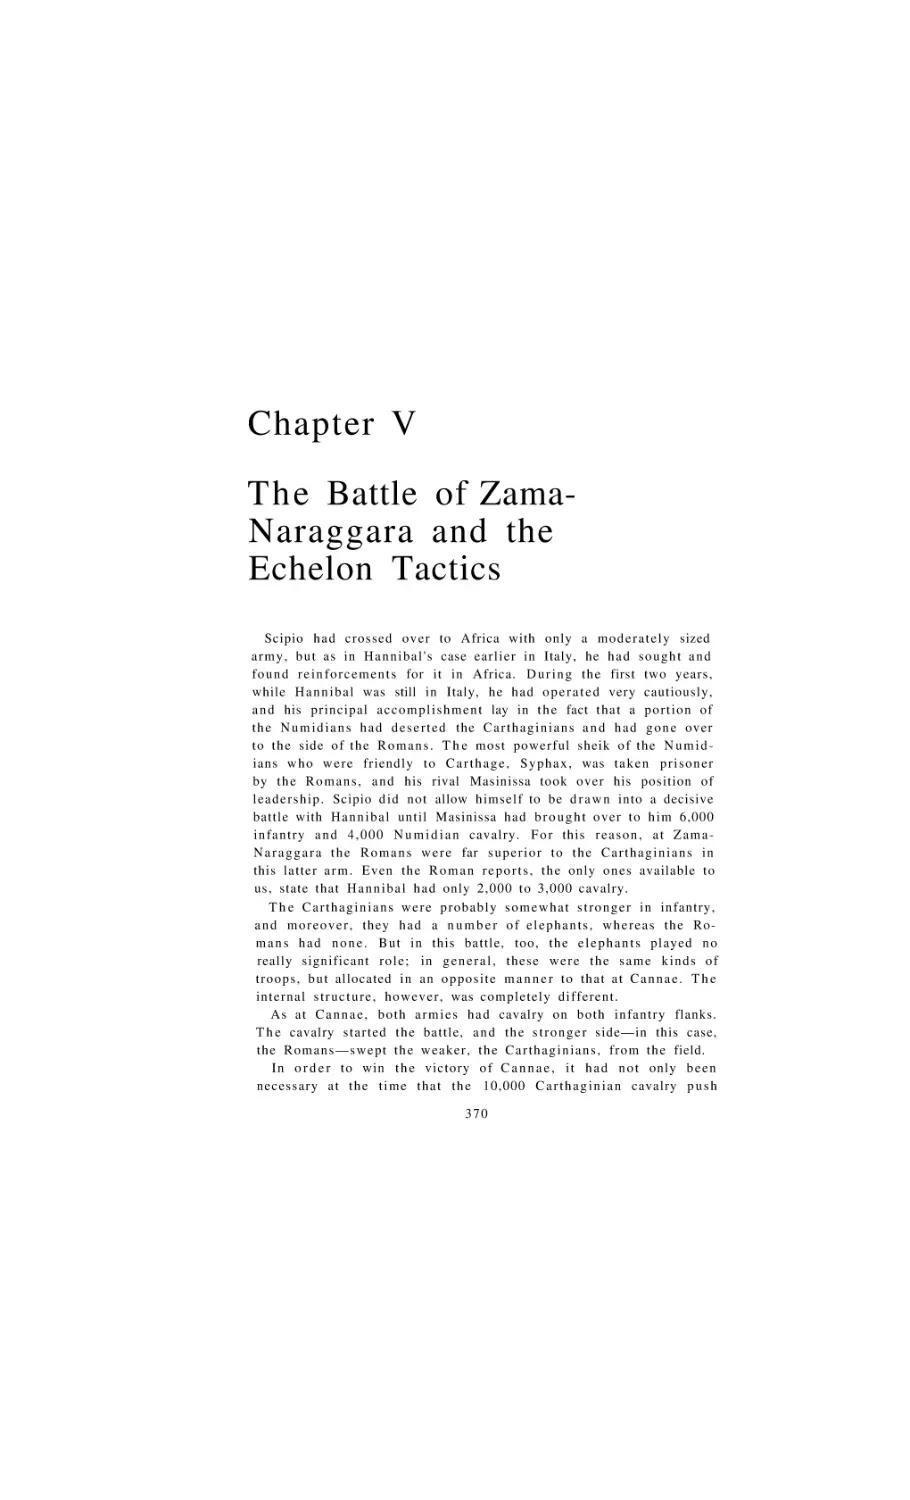 The Battle of Zama-Naraggara and the Echelon Tactics